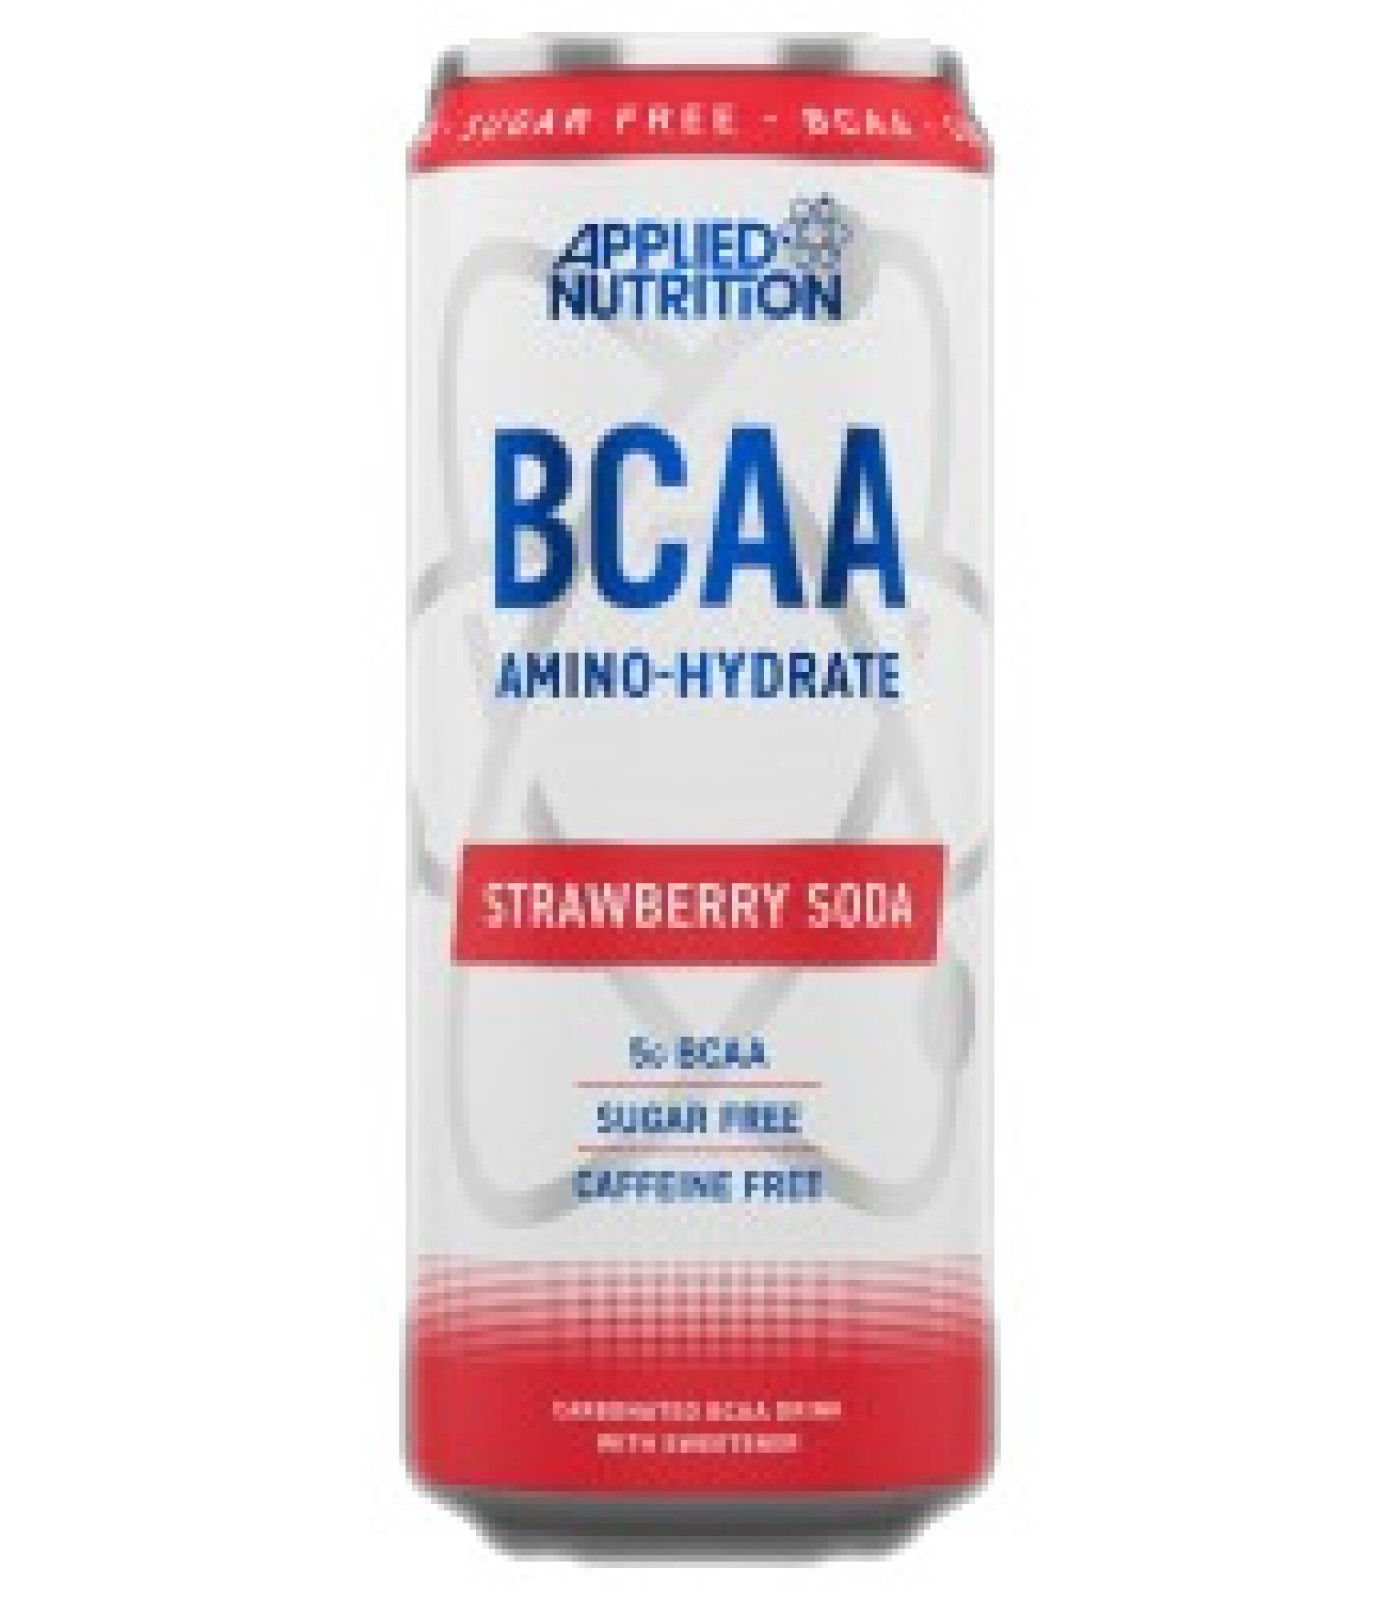 Applied Nutrition - BCAA Amino-Hydrate | Sugar Free / 330 мл